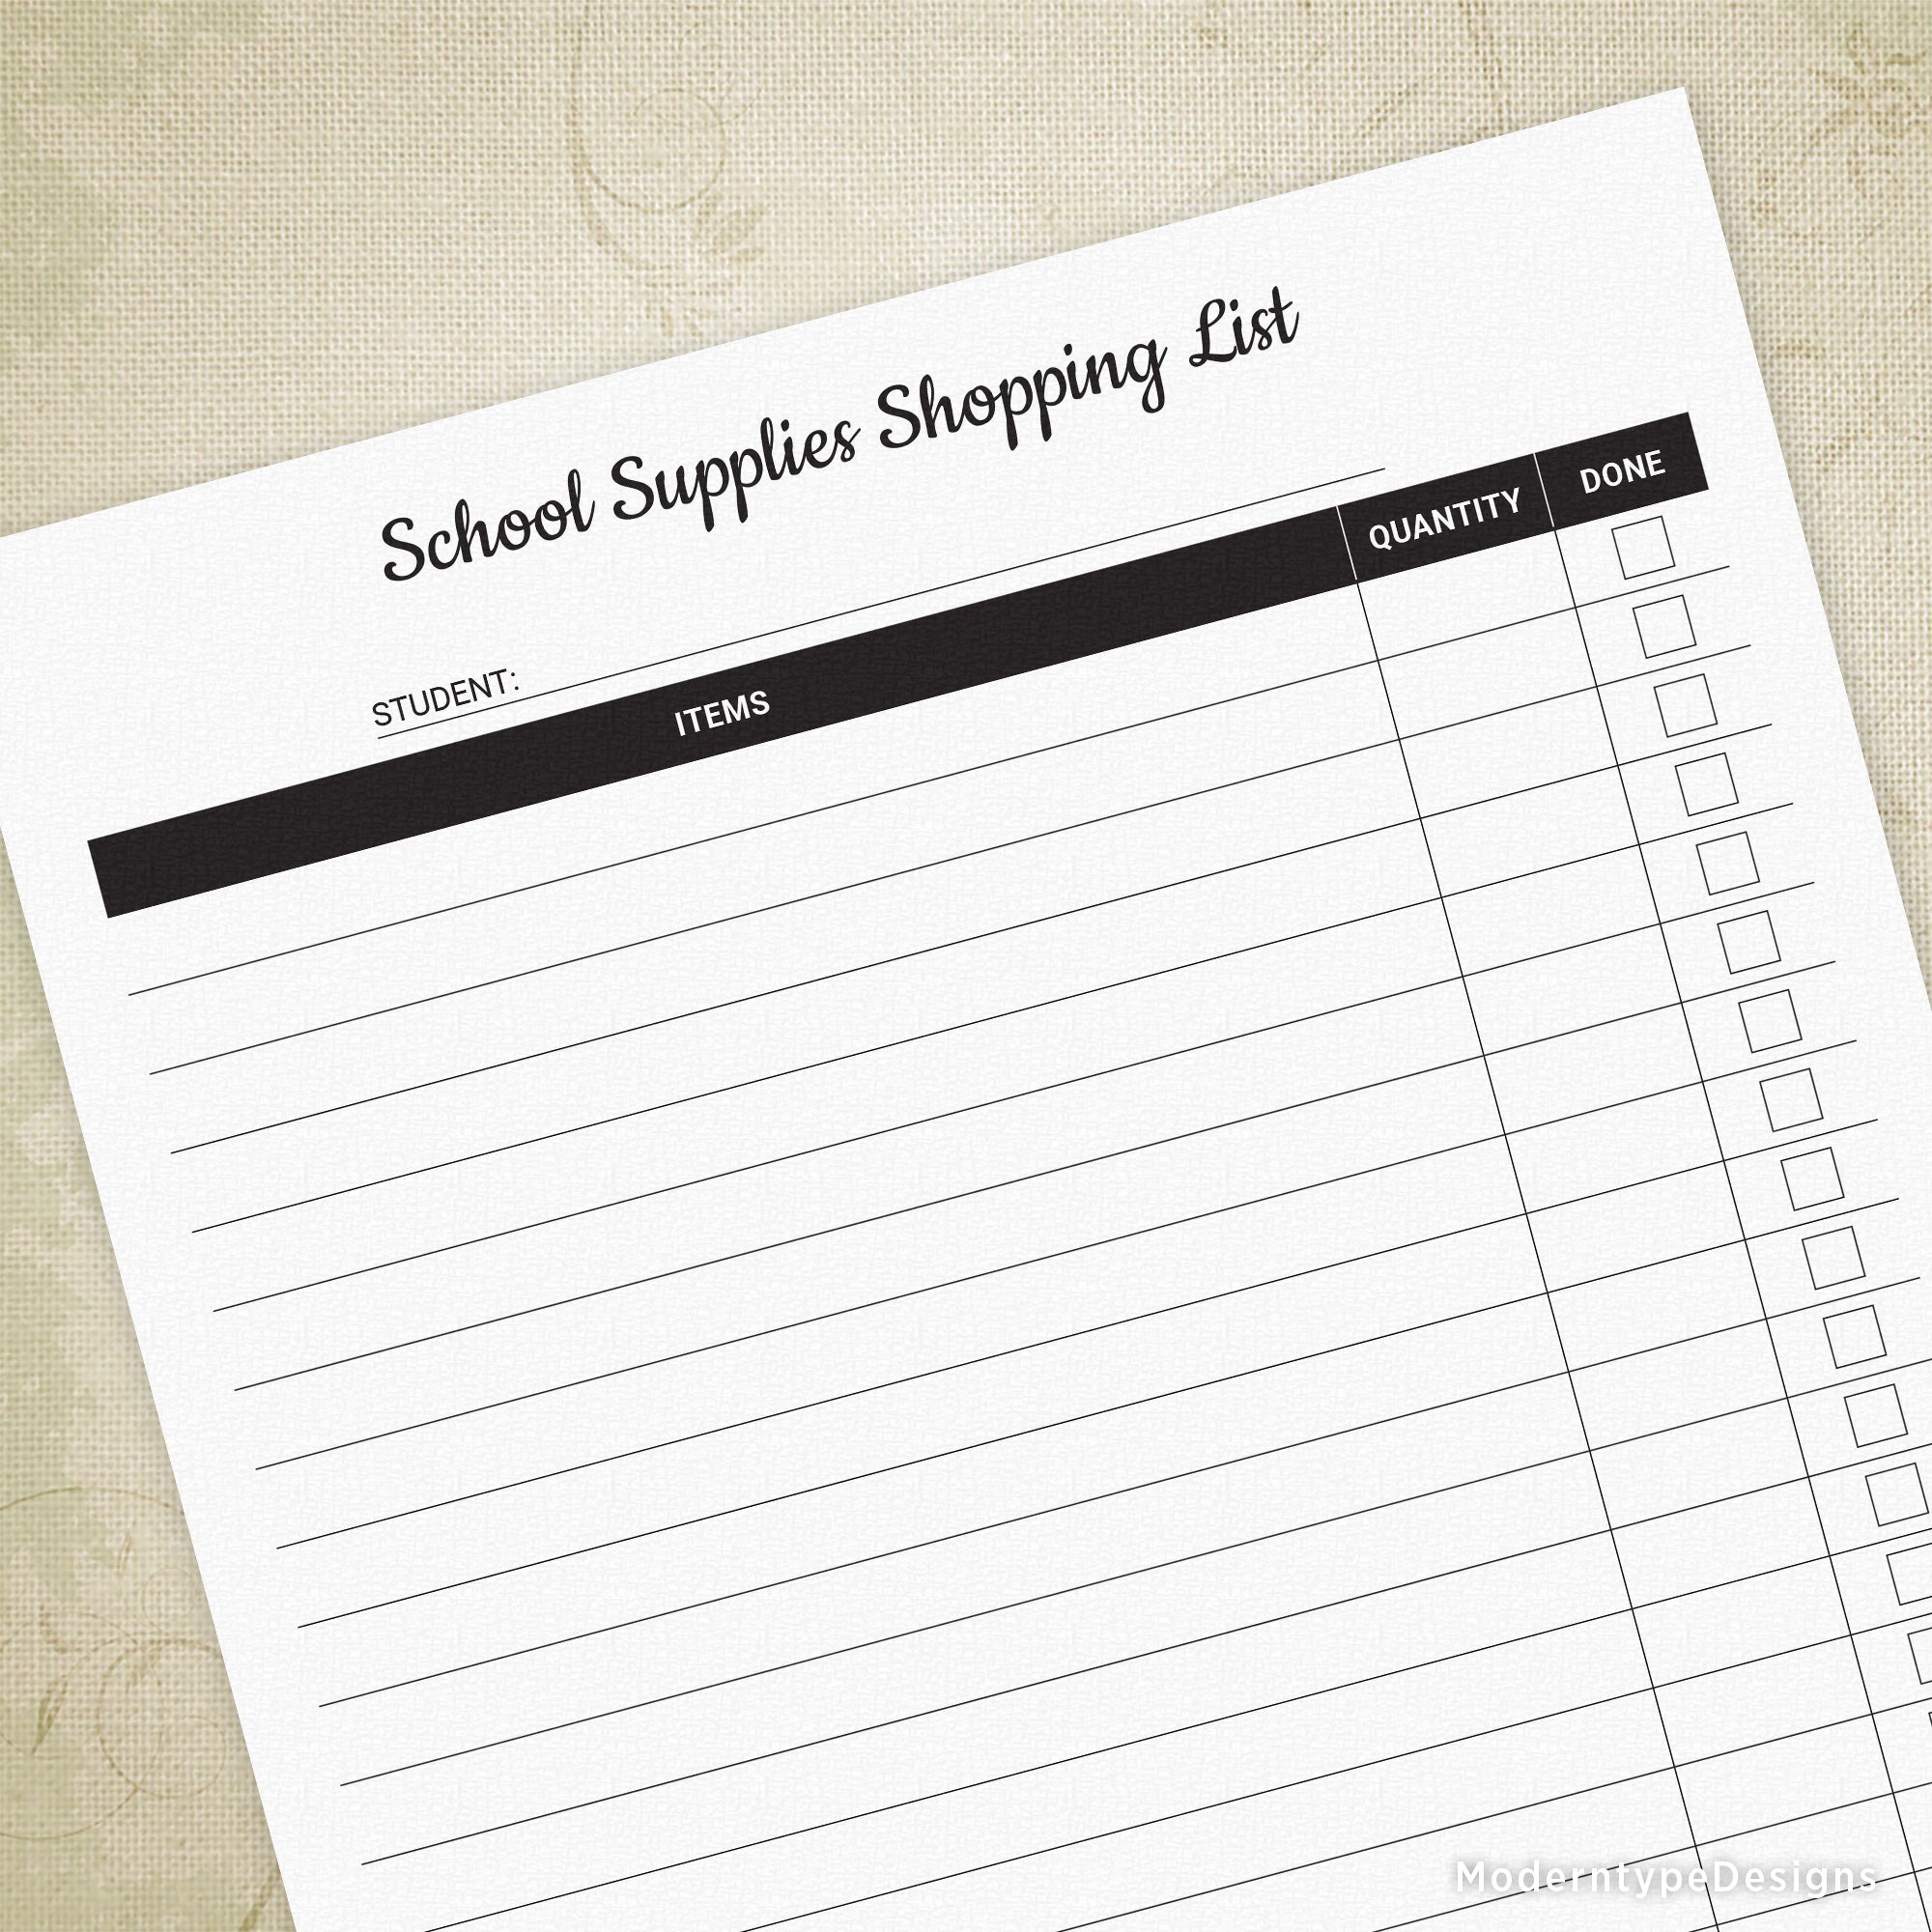 School Supplies Shopping List Printable